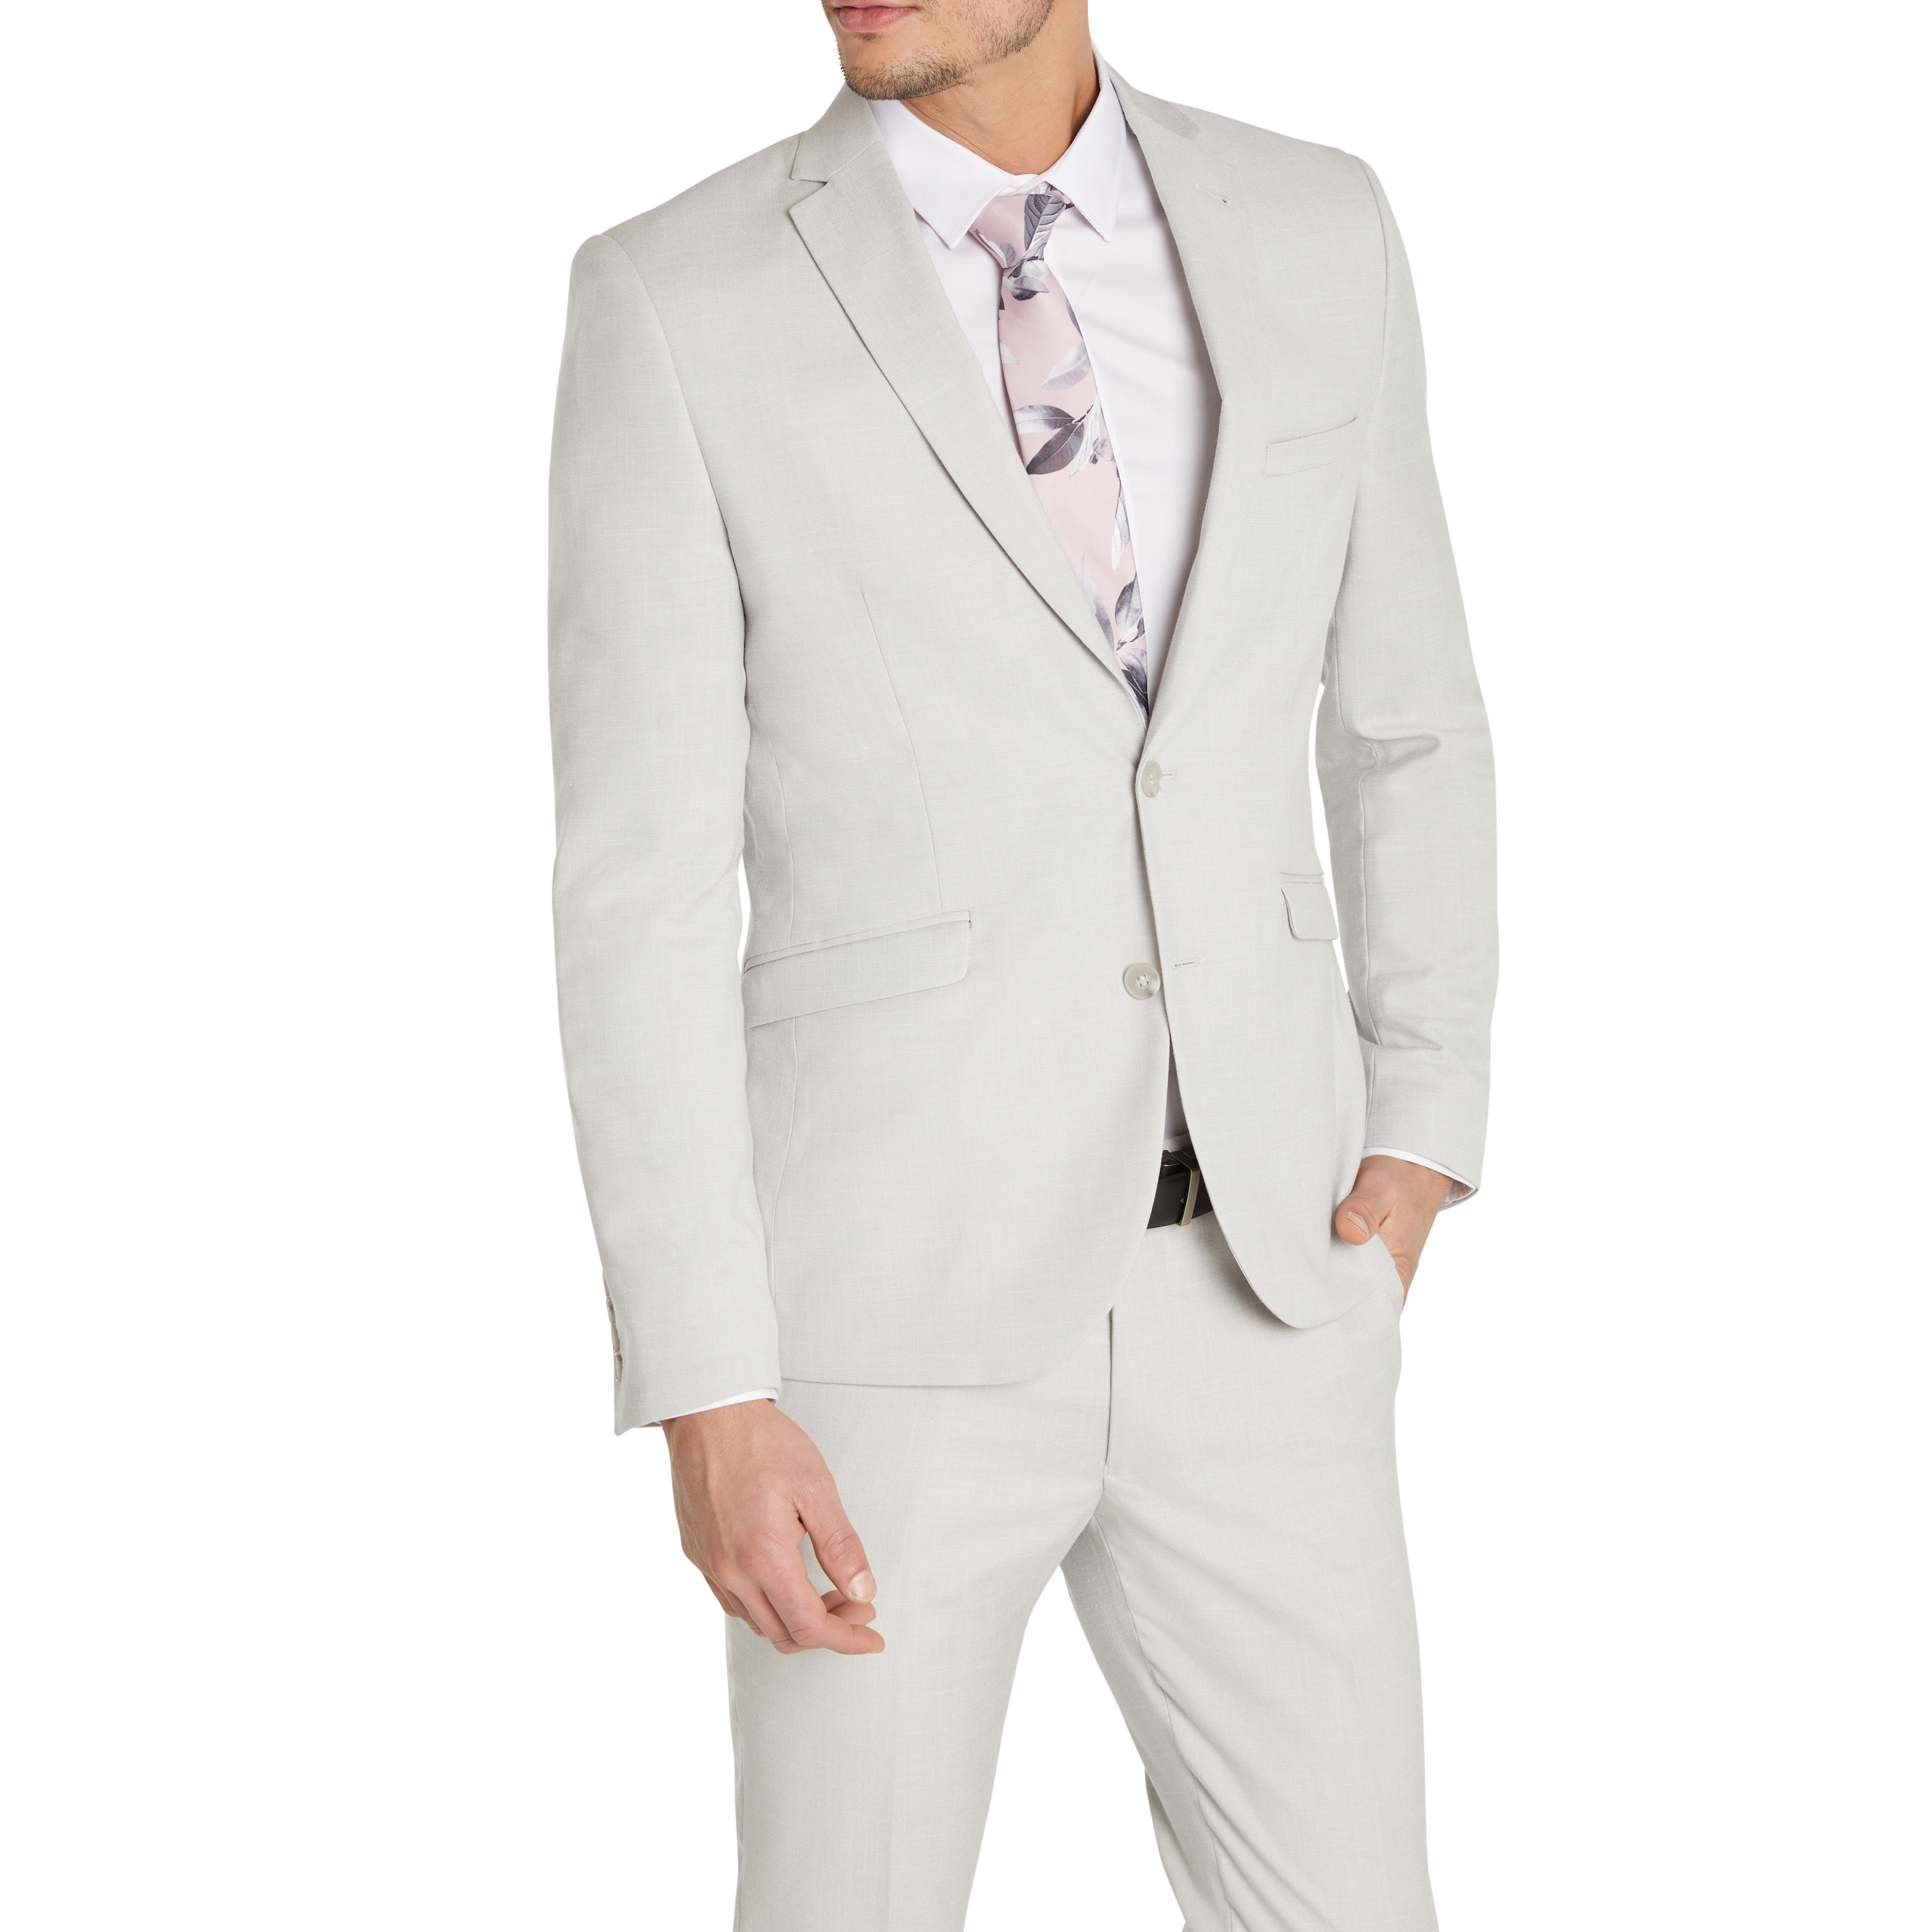 Designer Business Black Gray White Checked Suit Jacket Vest Slim Trousers   eBay